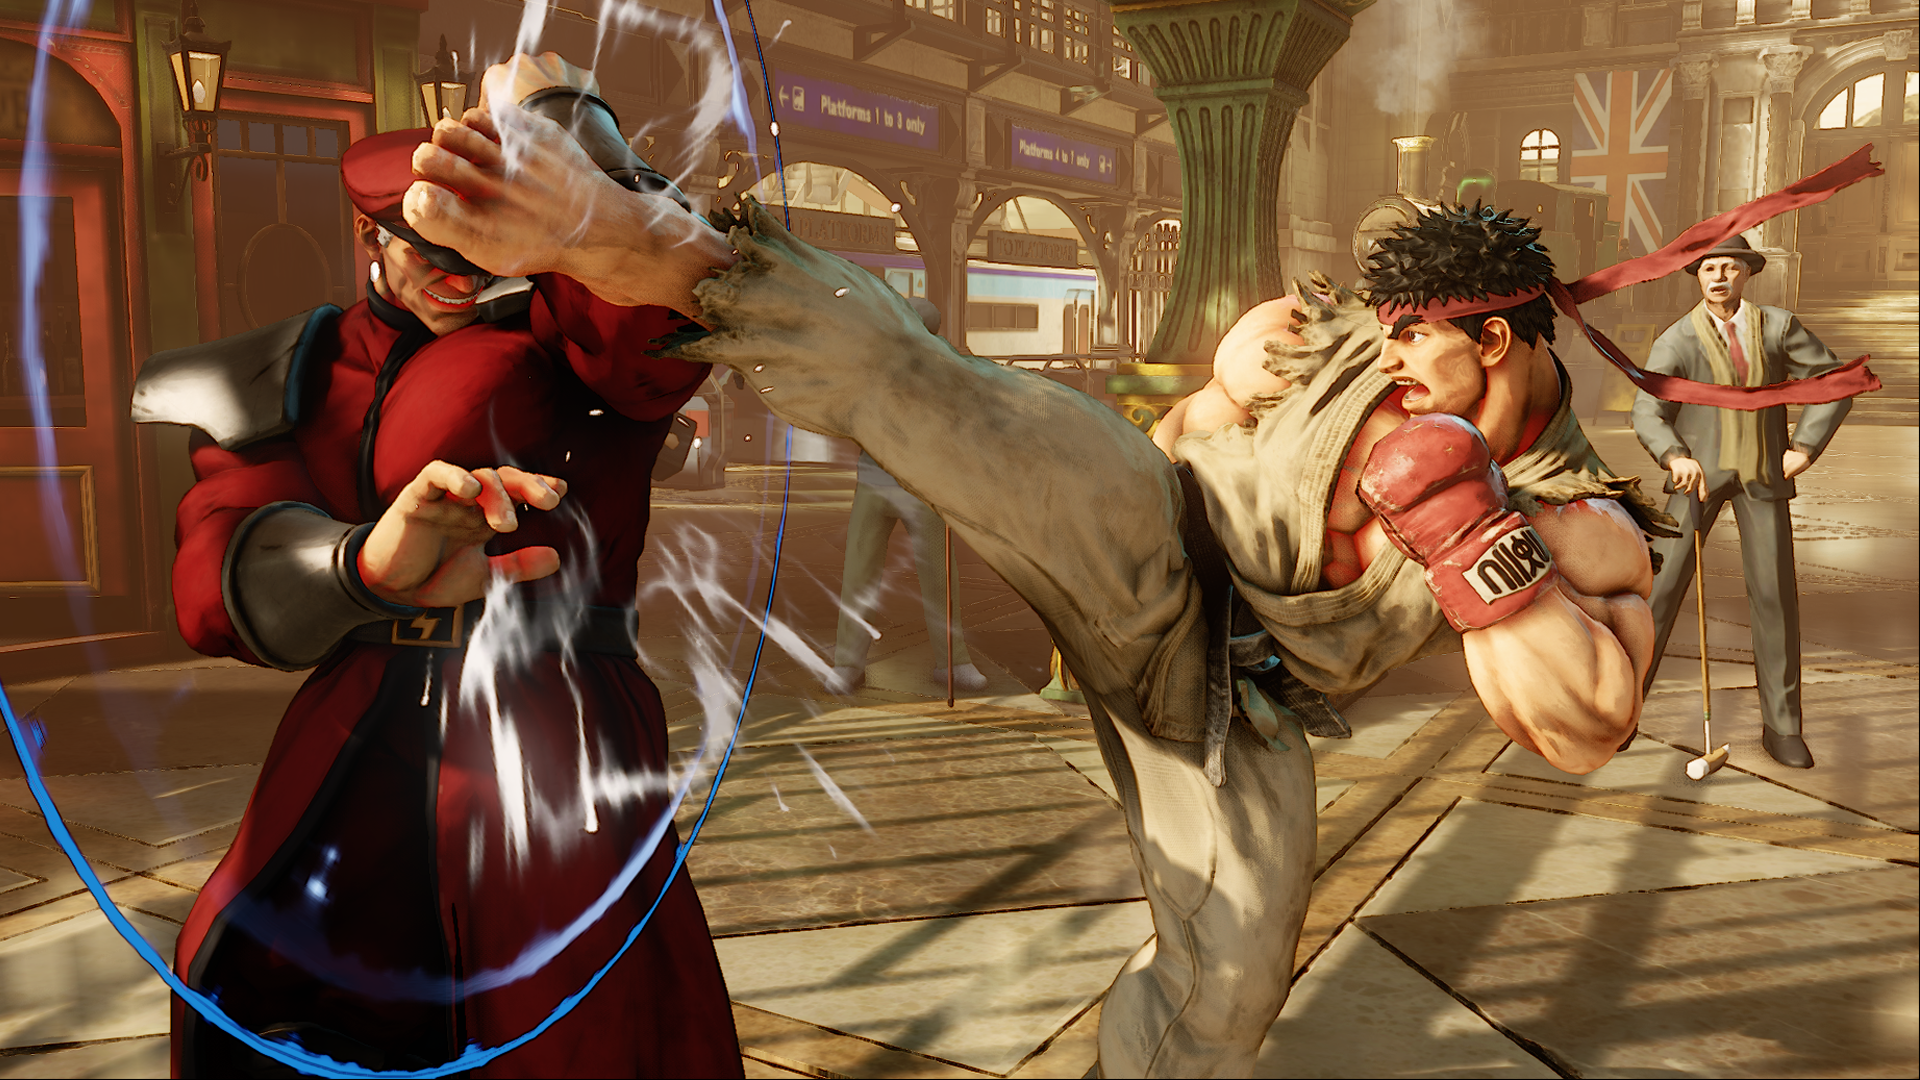 Sony Confirms Street Fighter V PS4 Bundle